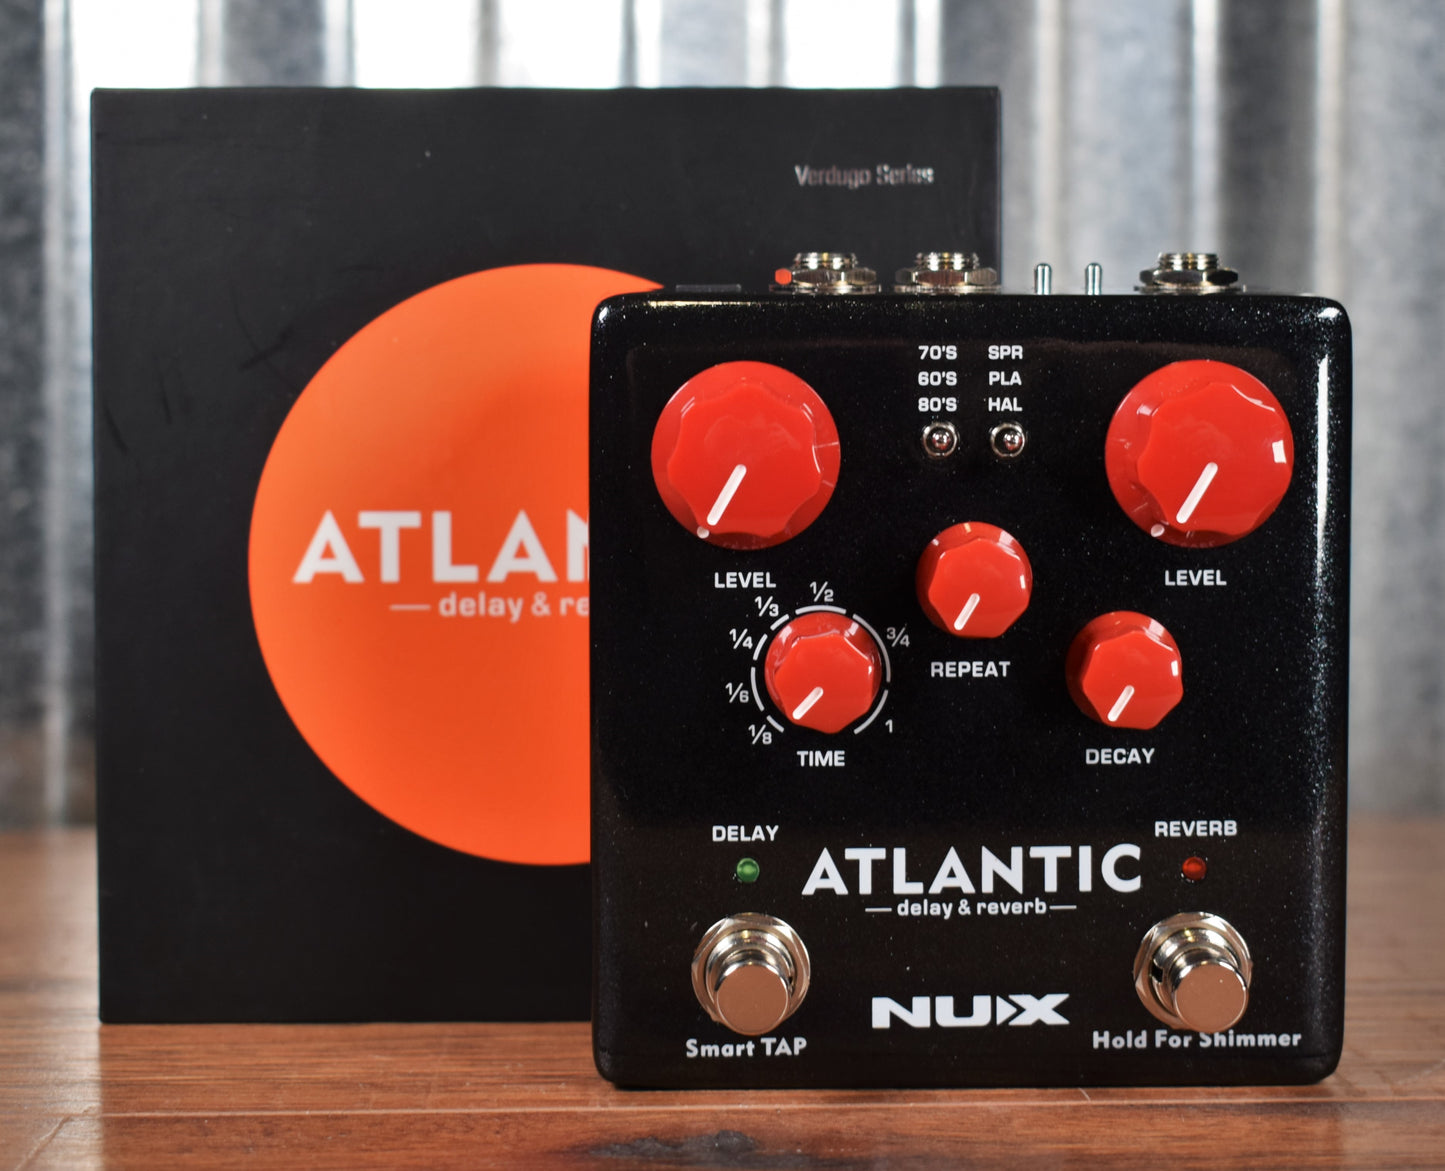 NUX NDR-5 Atlantic Delay & Reverb Guitar Effect Pedal